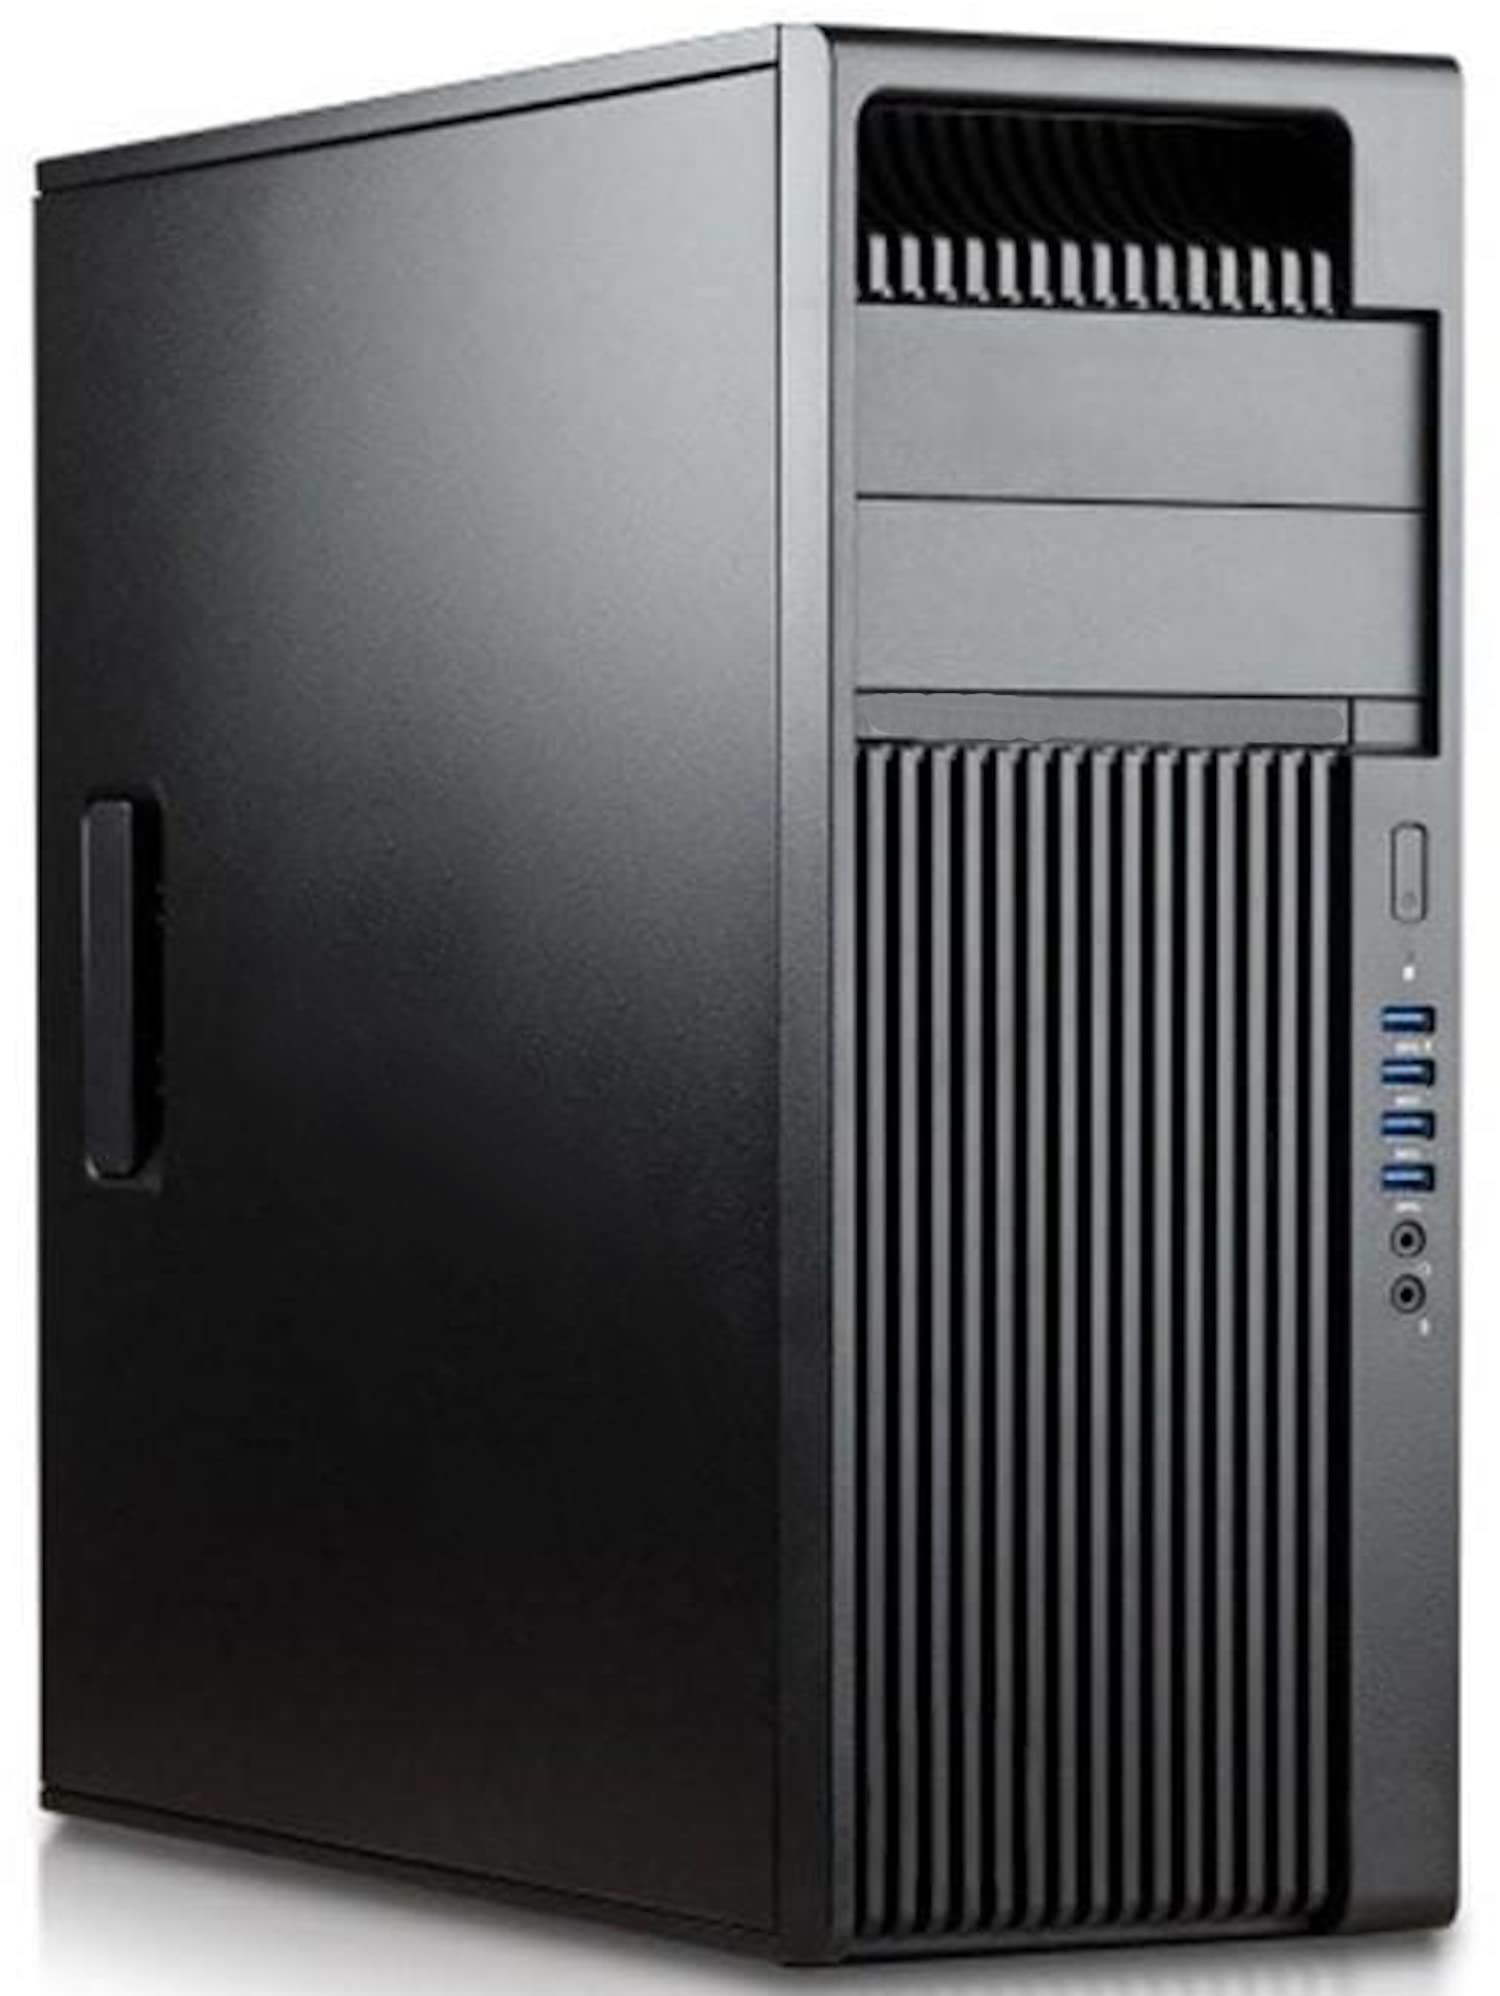 PCSP Z440 Workstation Tower Desktop PC, Intel Xeon E5-1650 v3 up to 3.8GHz 6-Core, 64GB RAM, 512GB PCIe NVMe M.2 SSD, Quadro K620 2GB, Windows 10 Pro (Renewed)